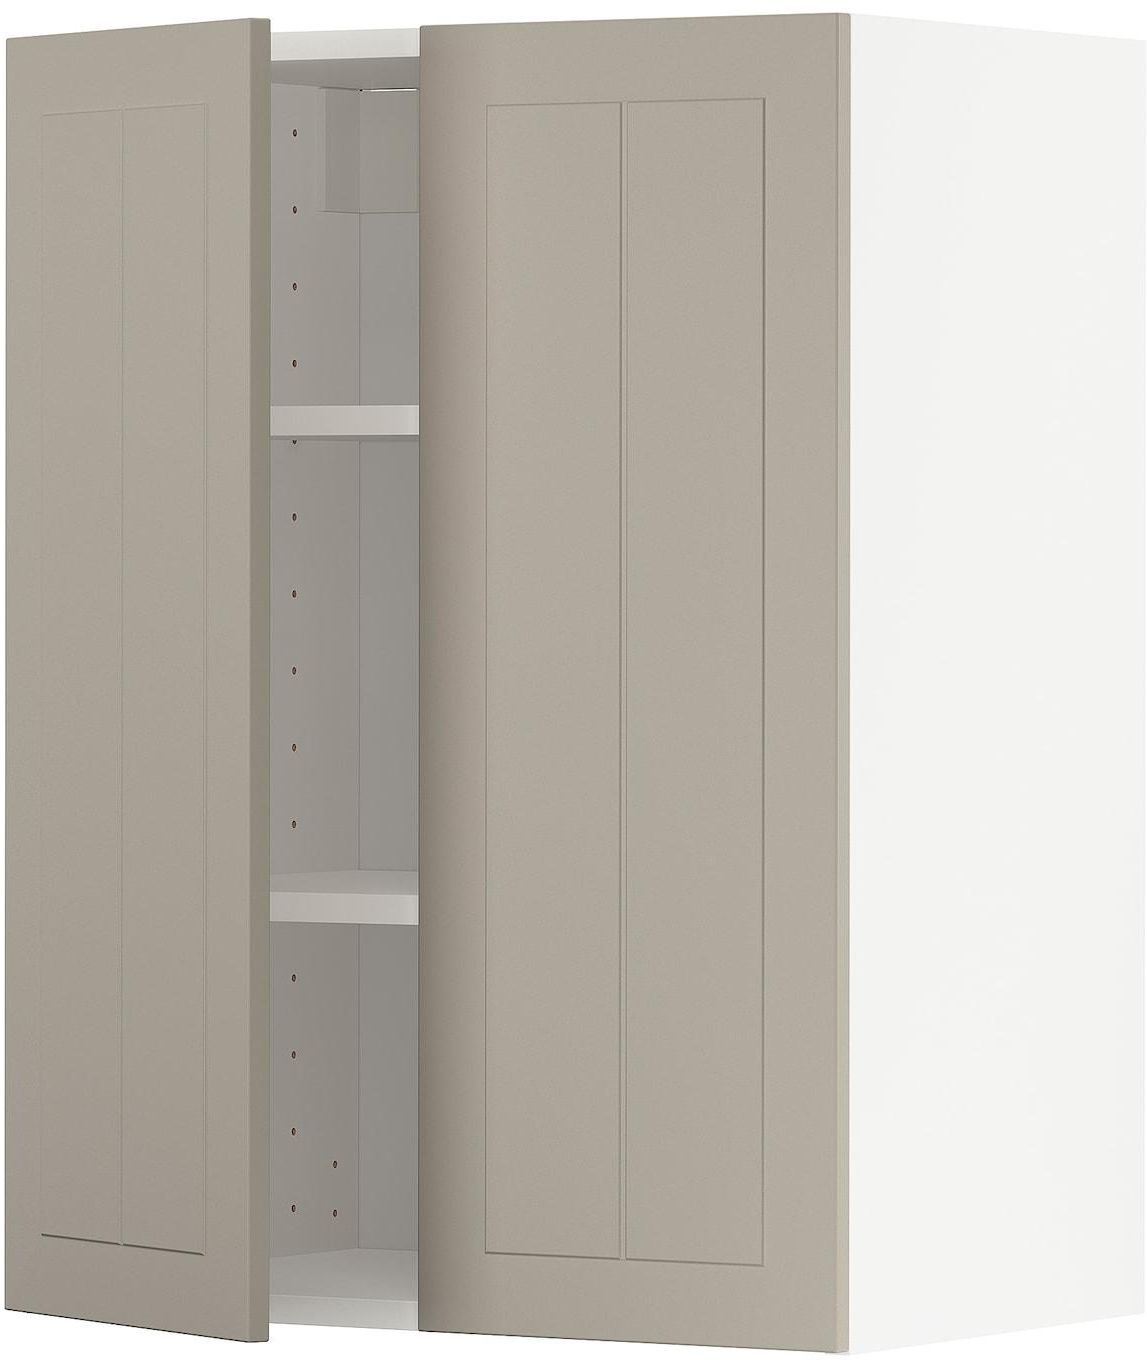 METOD Wall cabinet with shelves/2 doors - white/Stensund beige 60x80 cm